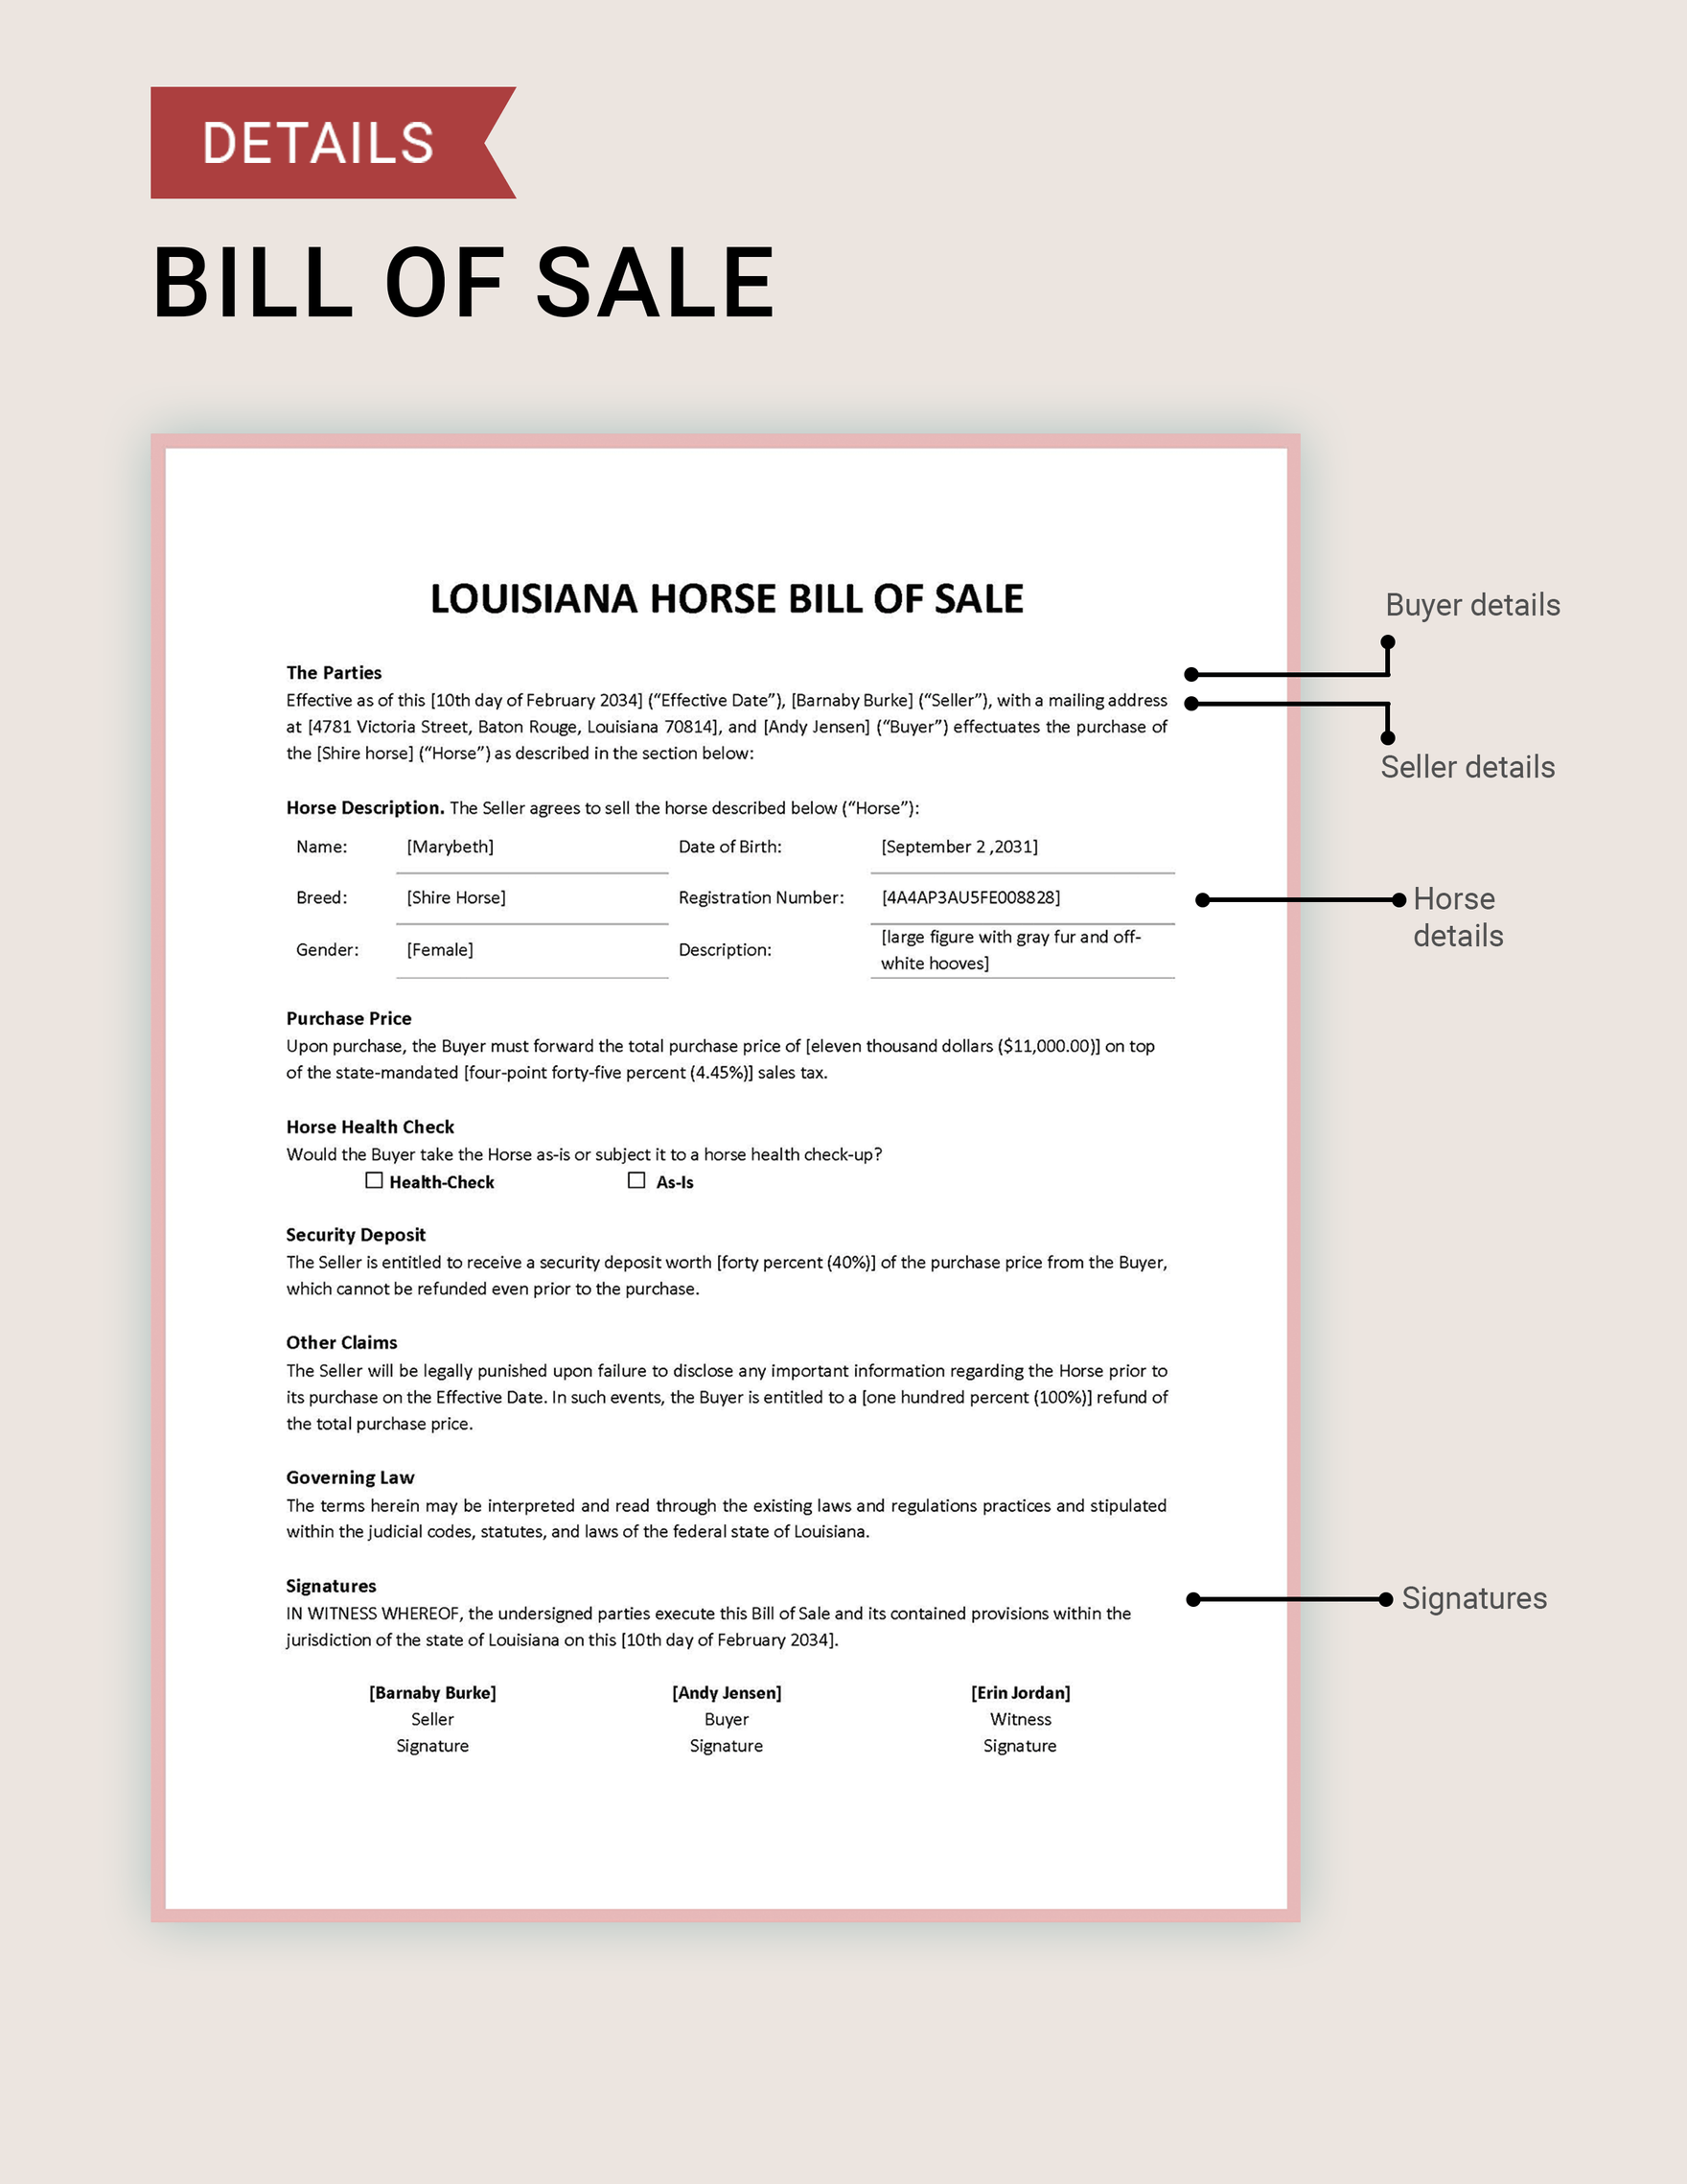 Louisiana Horse Bill of Sale Template